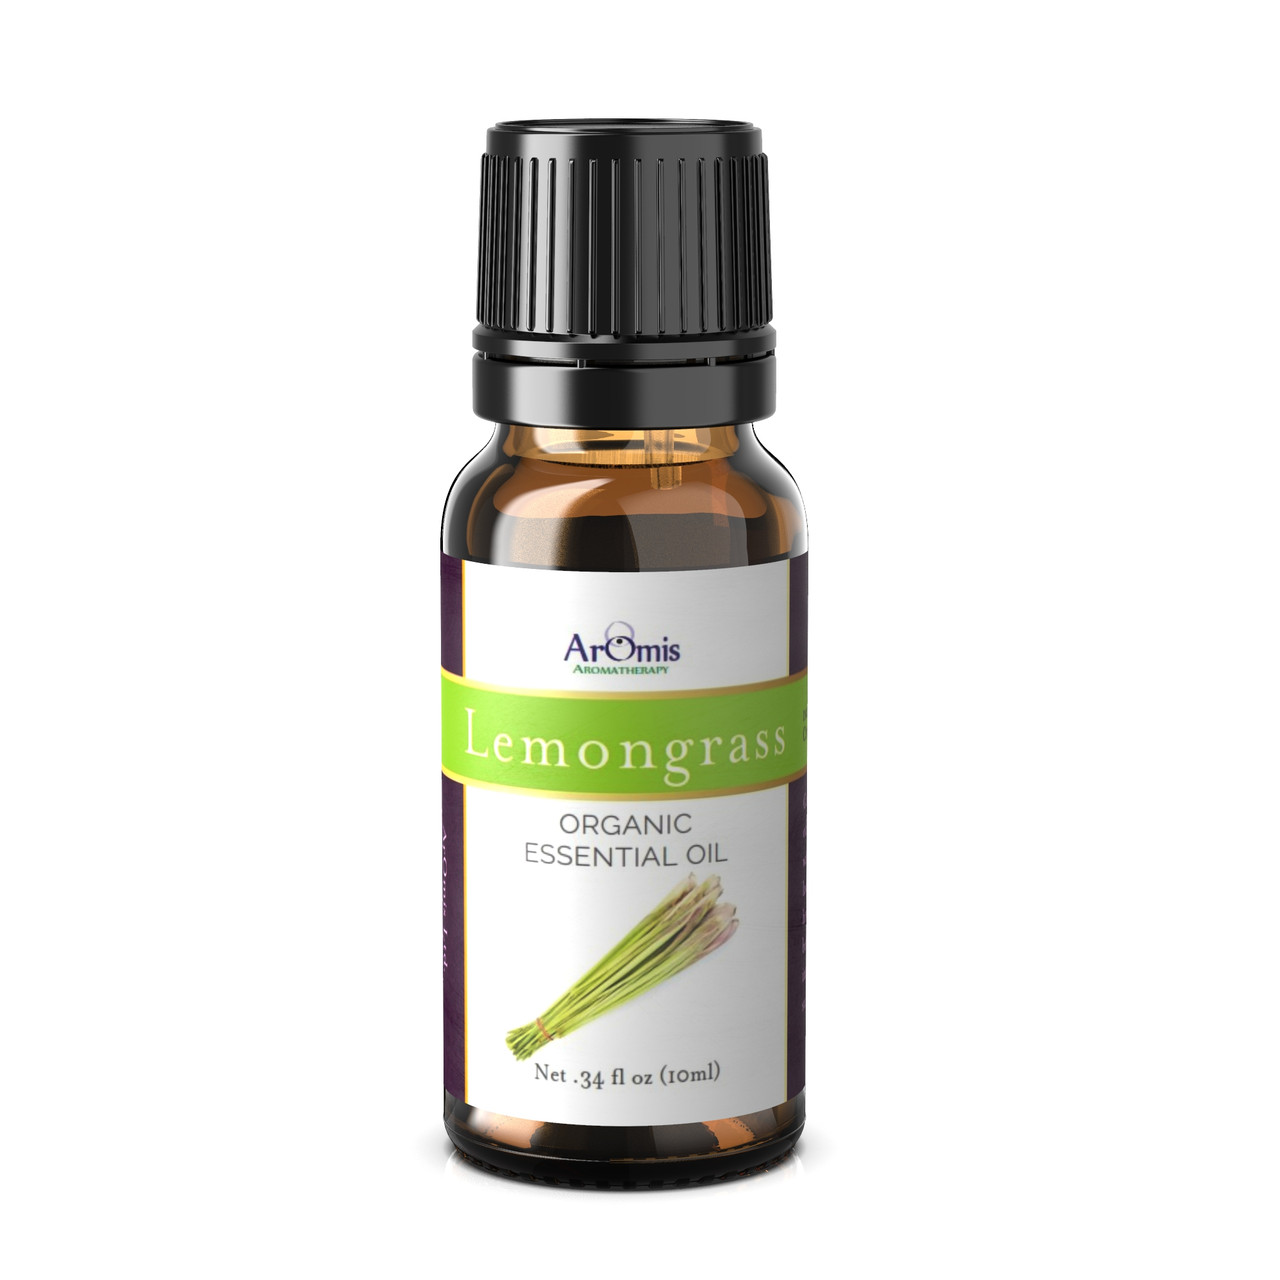 Aromatherapy Essential Oil Kit - 6 Essential Oils Set 5ml - Buy Online